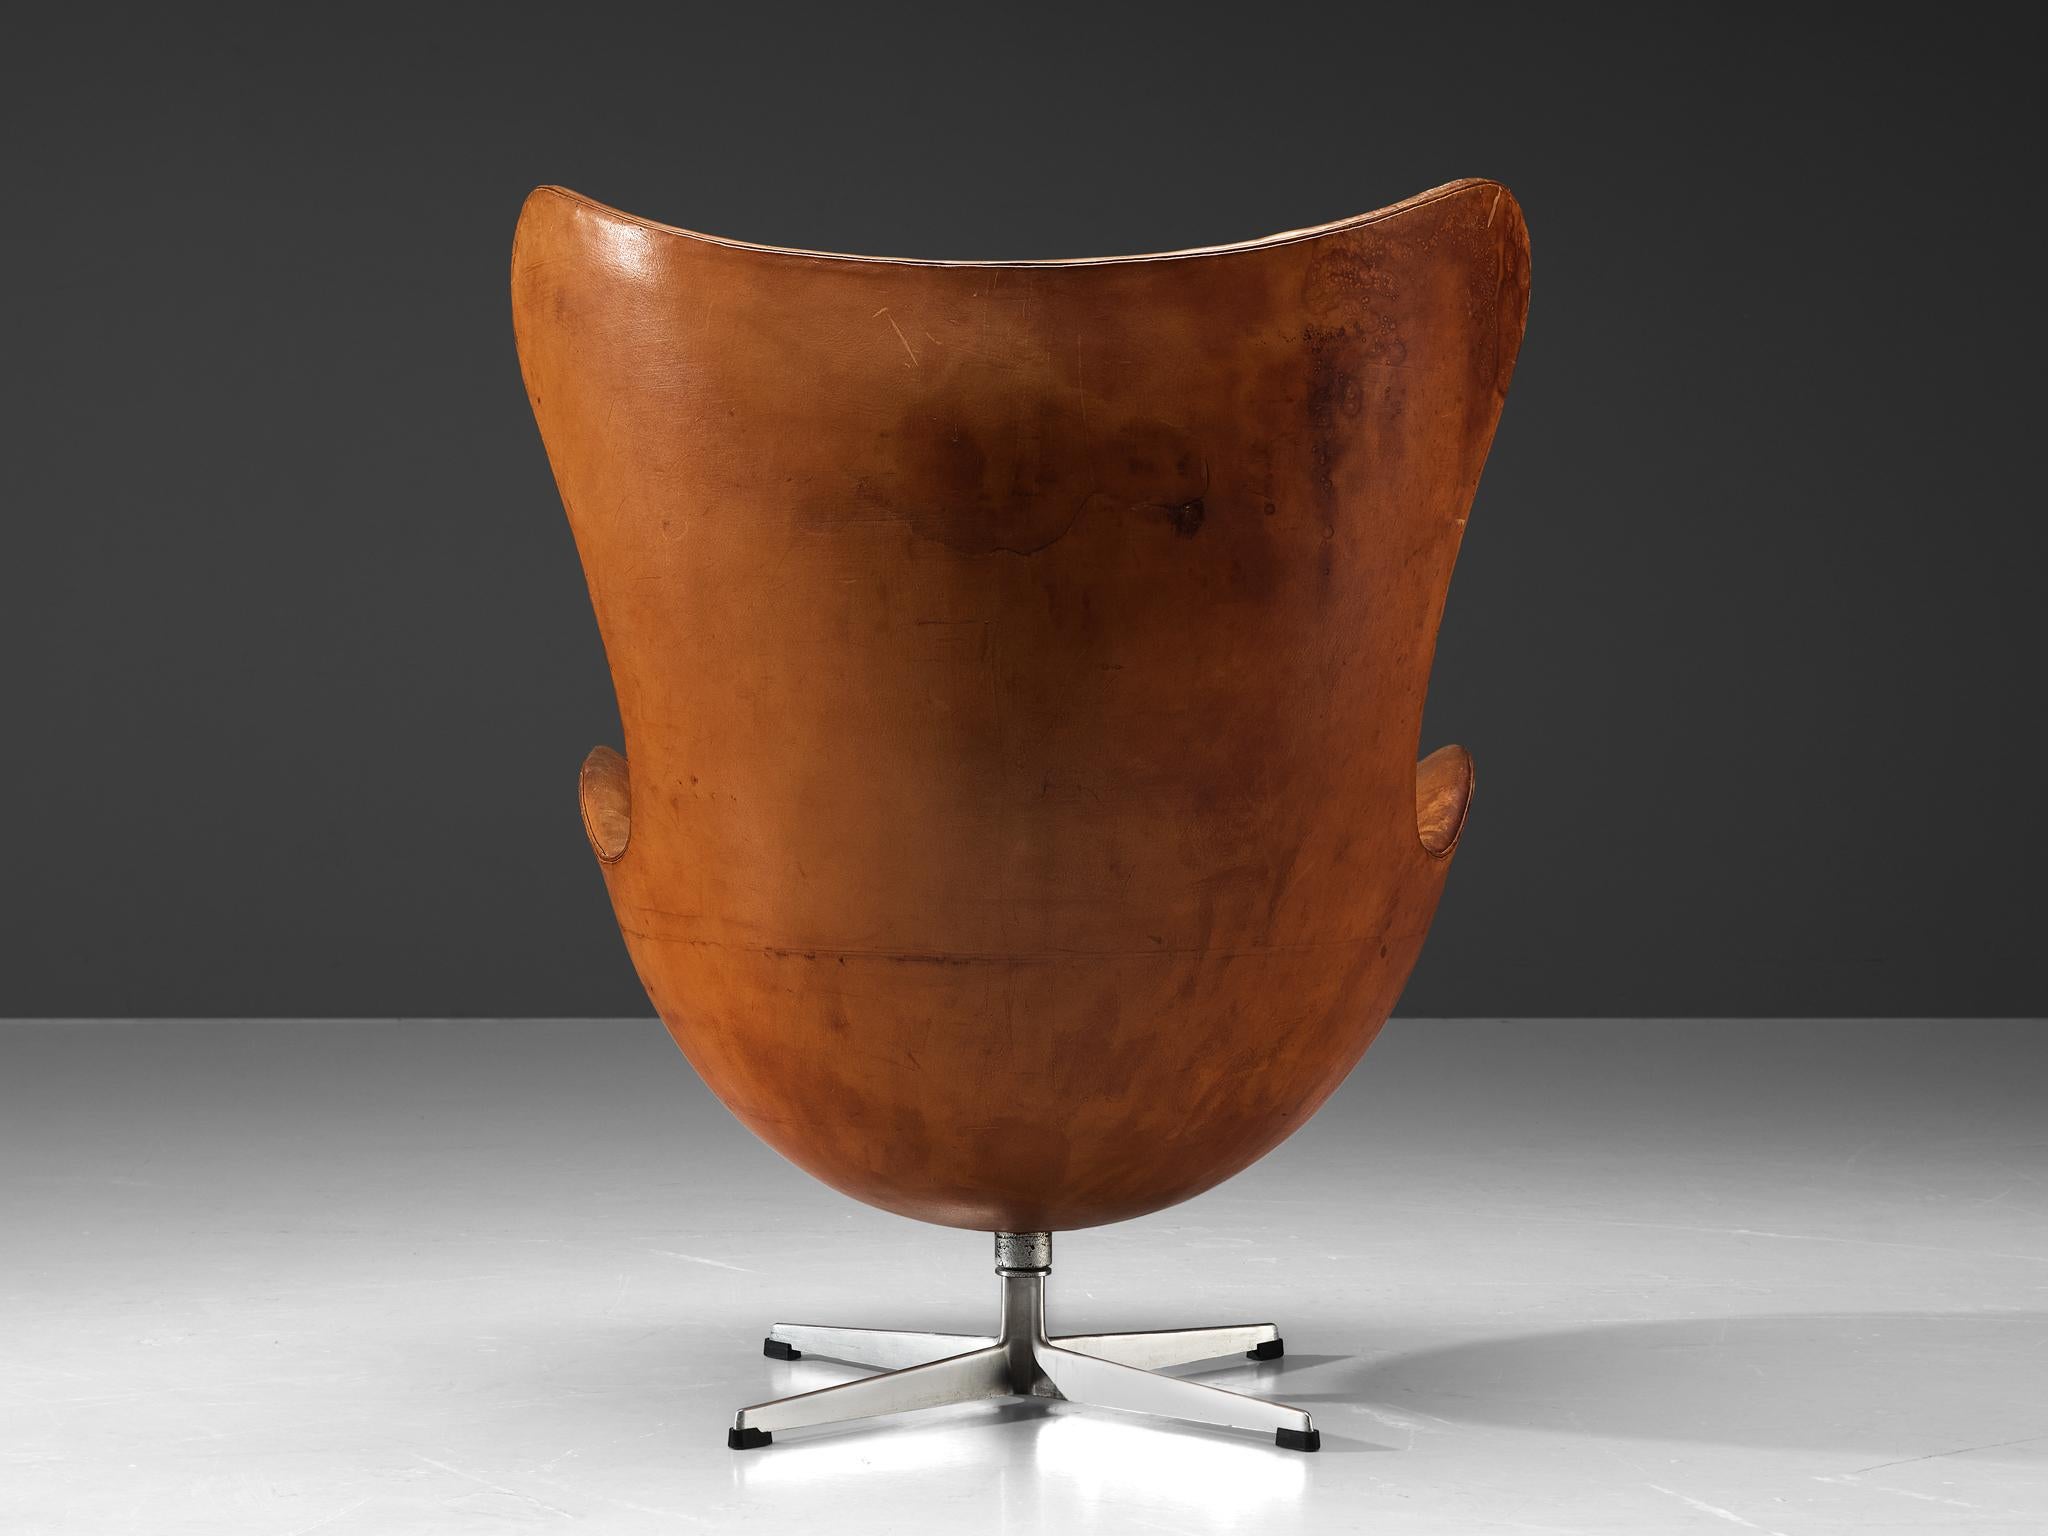 Steel Arne Jacobsen for Fritz Hansen Early 'Egg' Lounge Chair in Cognac Leather